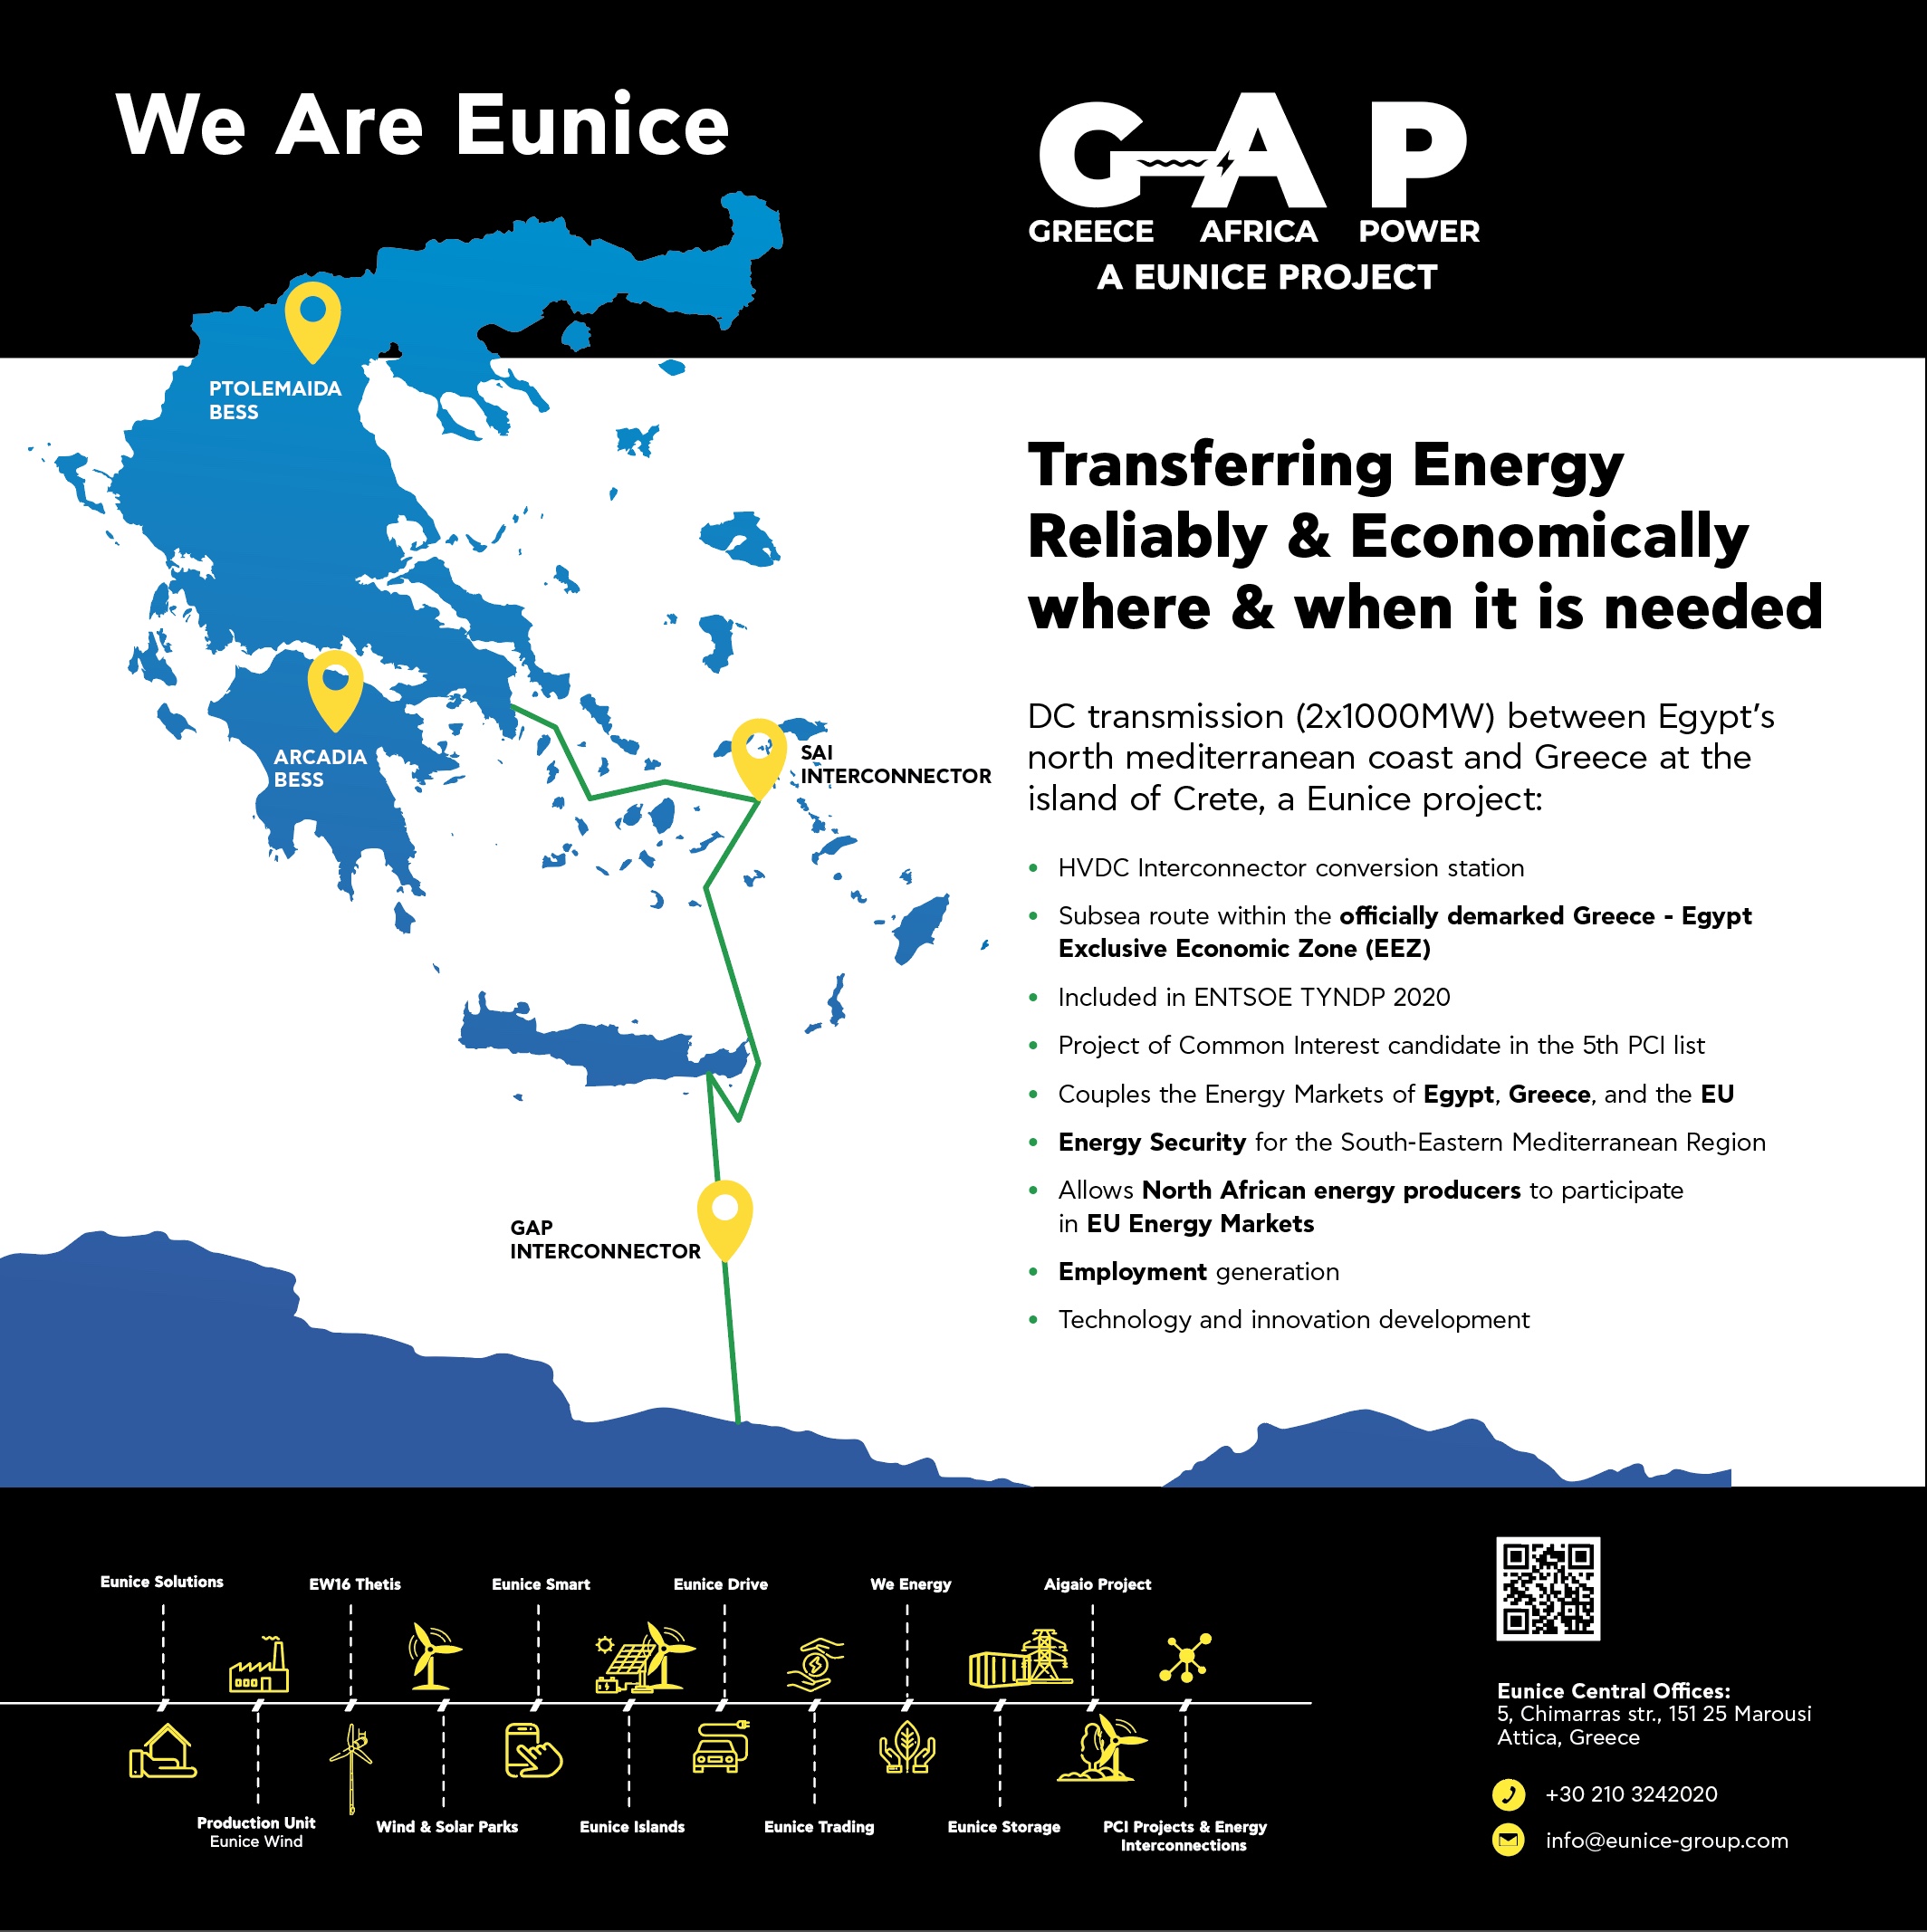 EUNICE: η επιστήμη και η αγορά δίνουν εισιτήριο άμεσης και ταχείας υλοποίησης του GAP ισχύος 2.000MW (2GW)